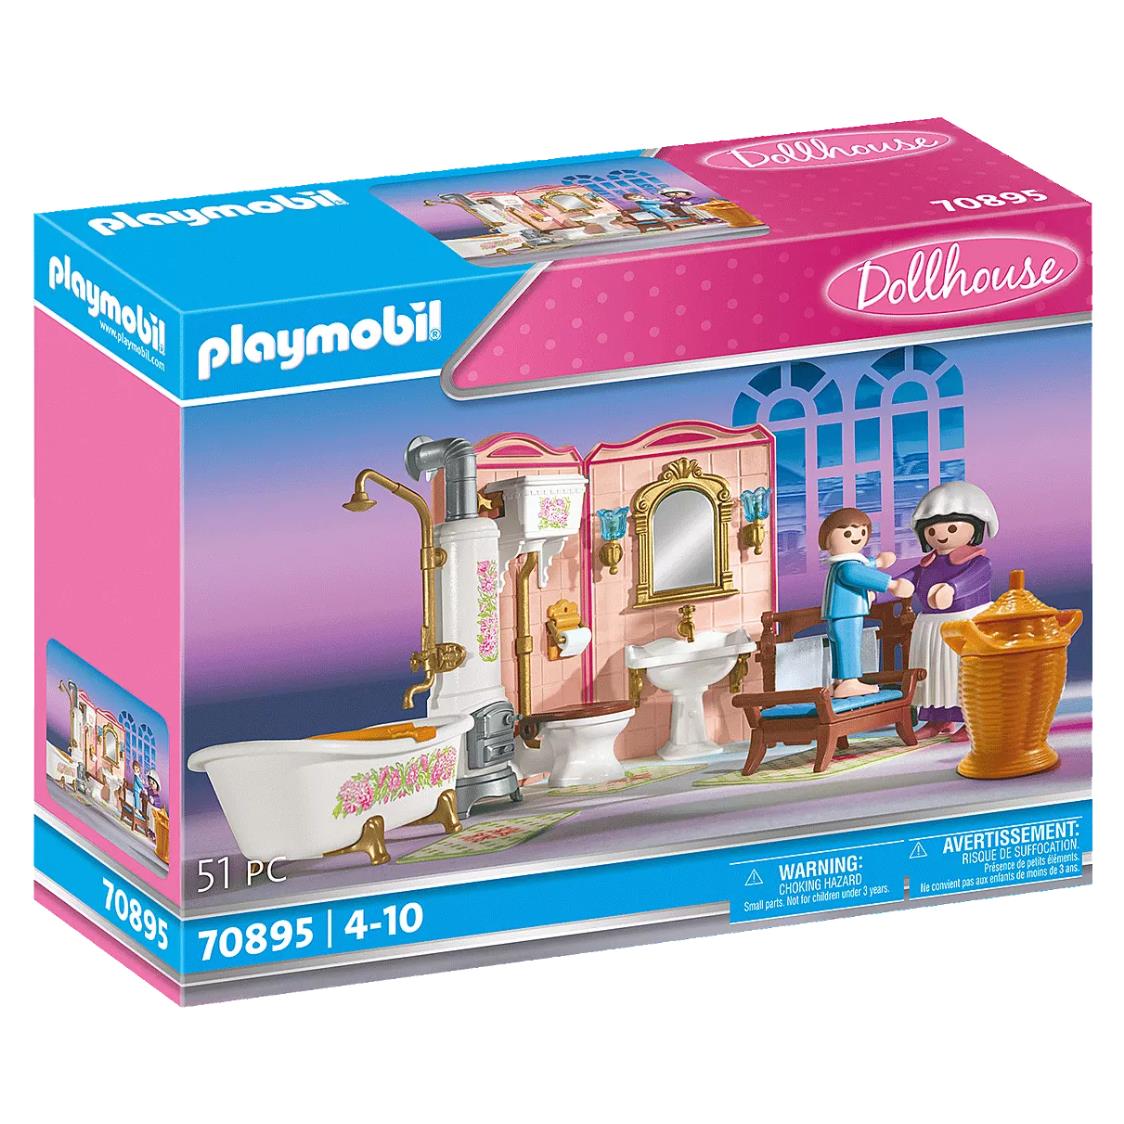 Playmobil Victorian Dollhouse Bathroom with Large Tub Set 70895